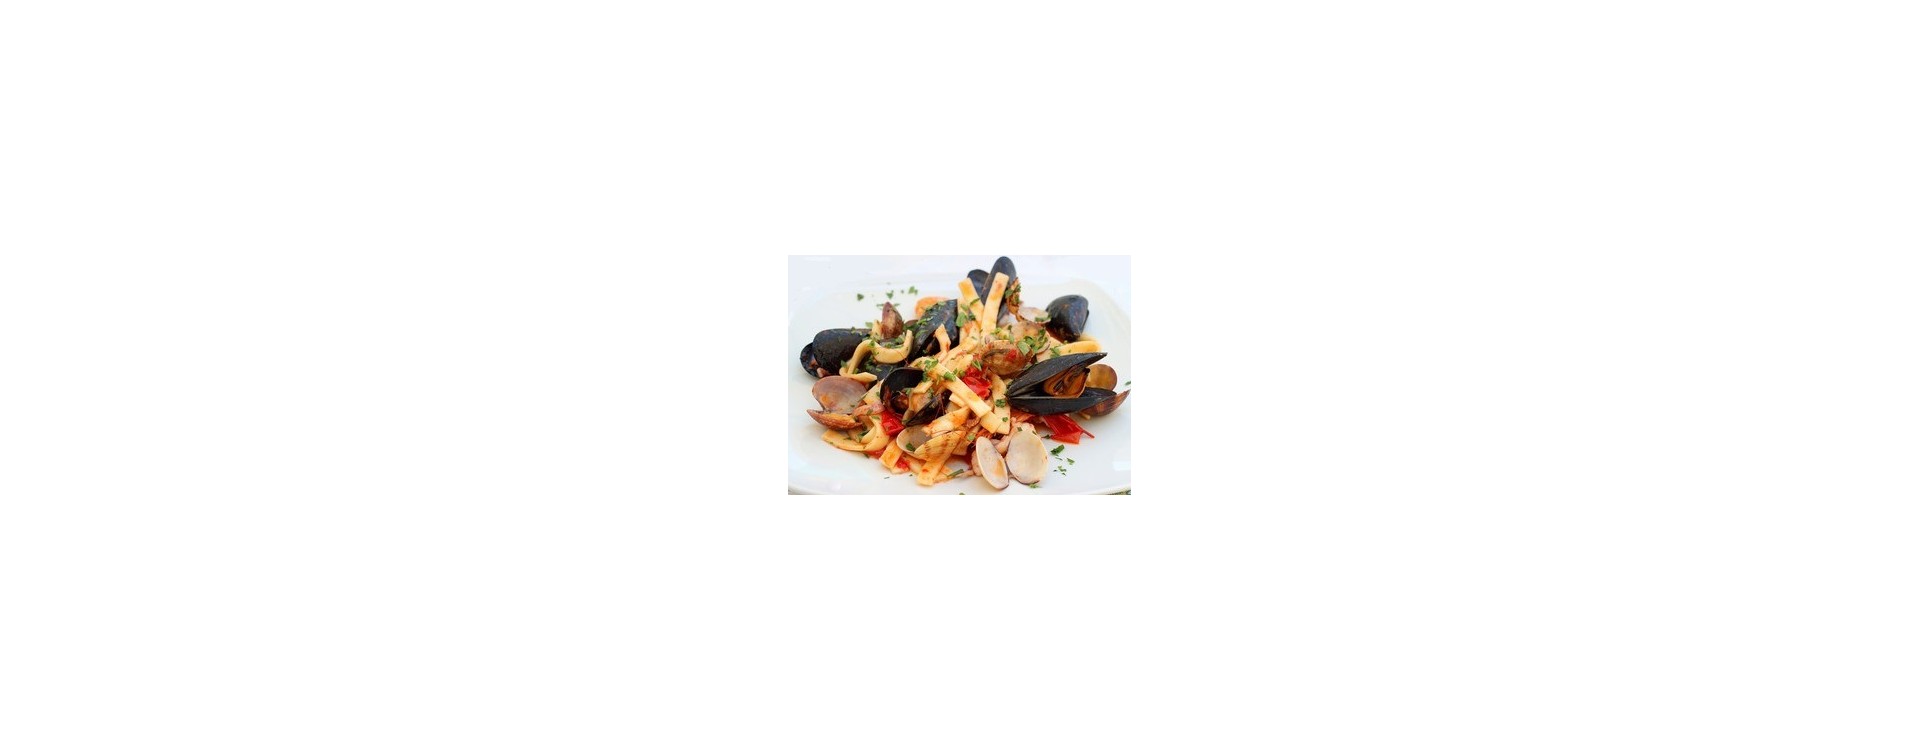 Scialatielli  pasta with sea food